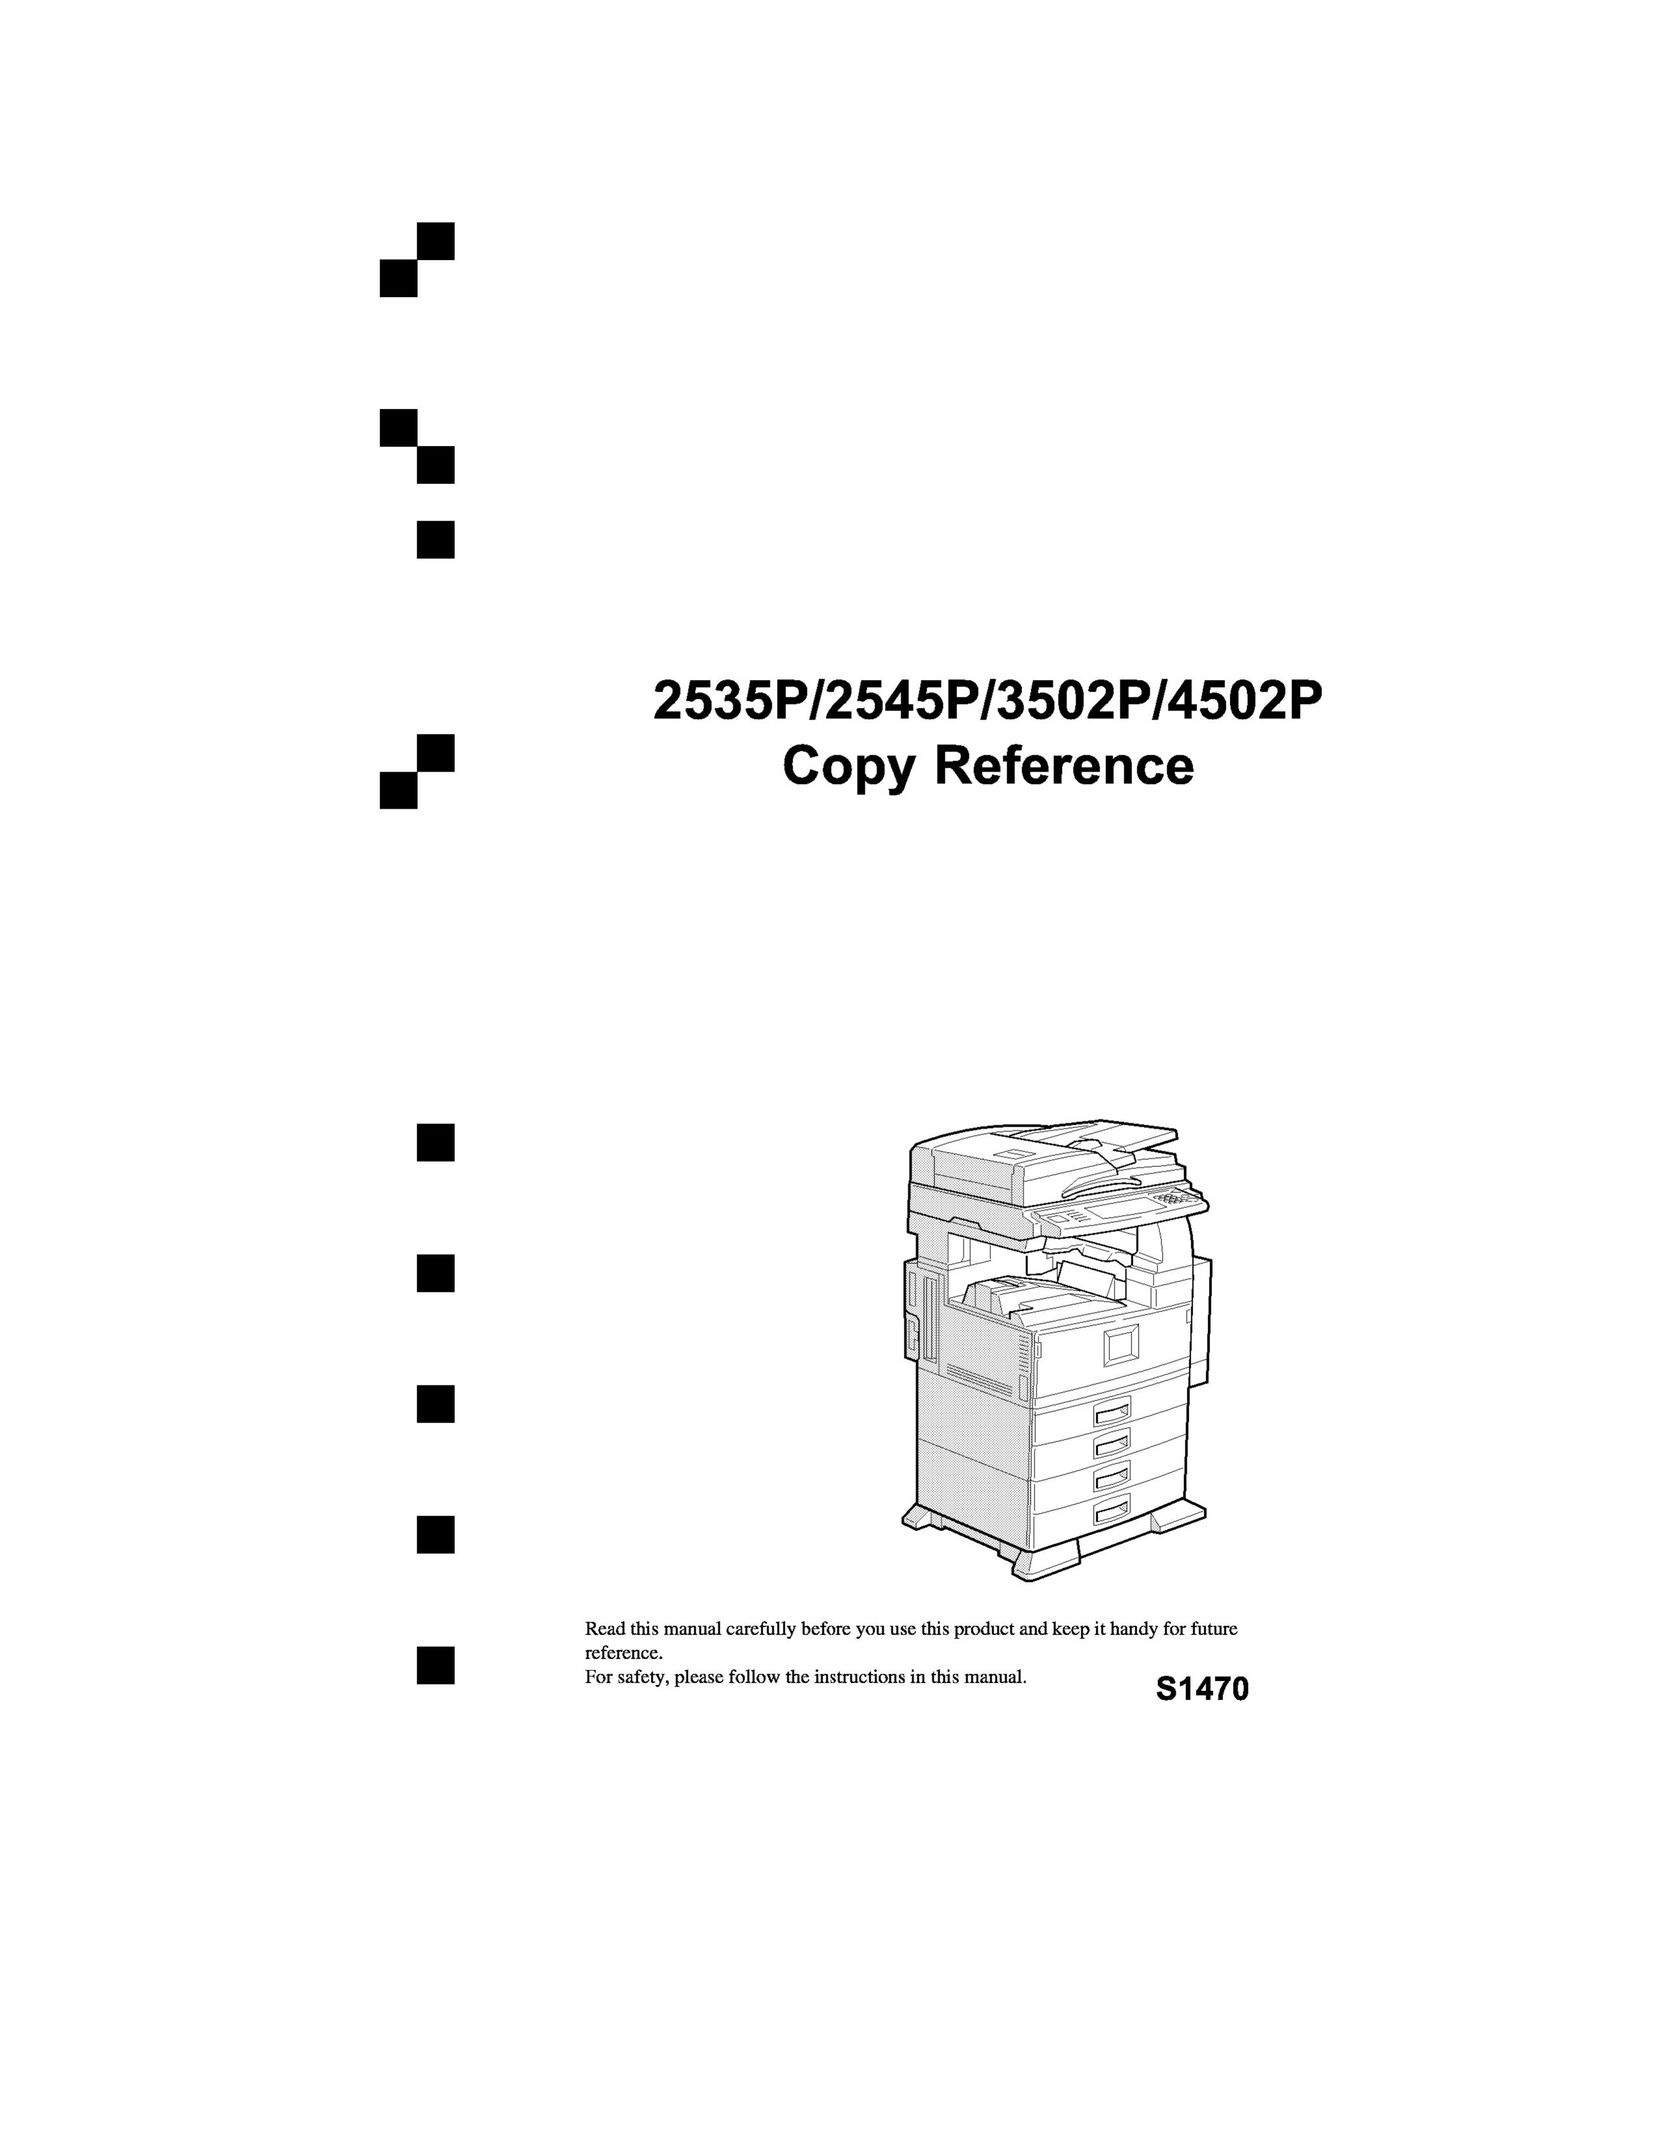 Savin 2535P All in One Printer User Manual